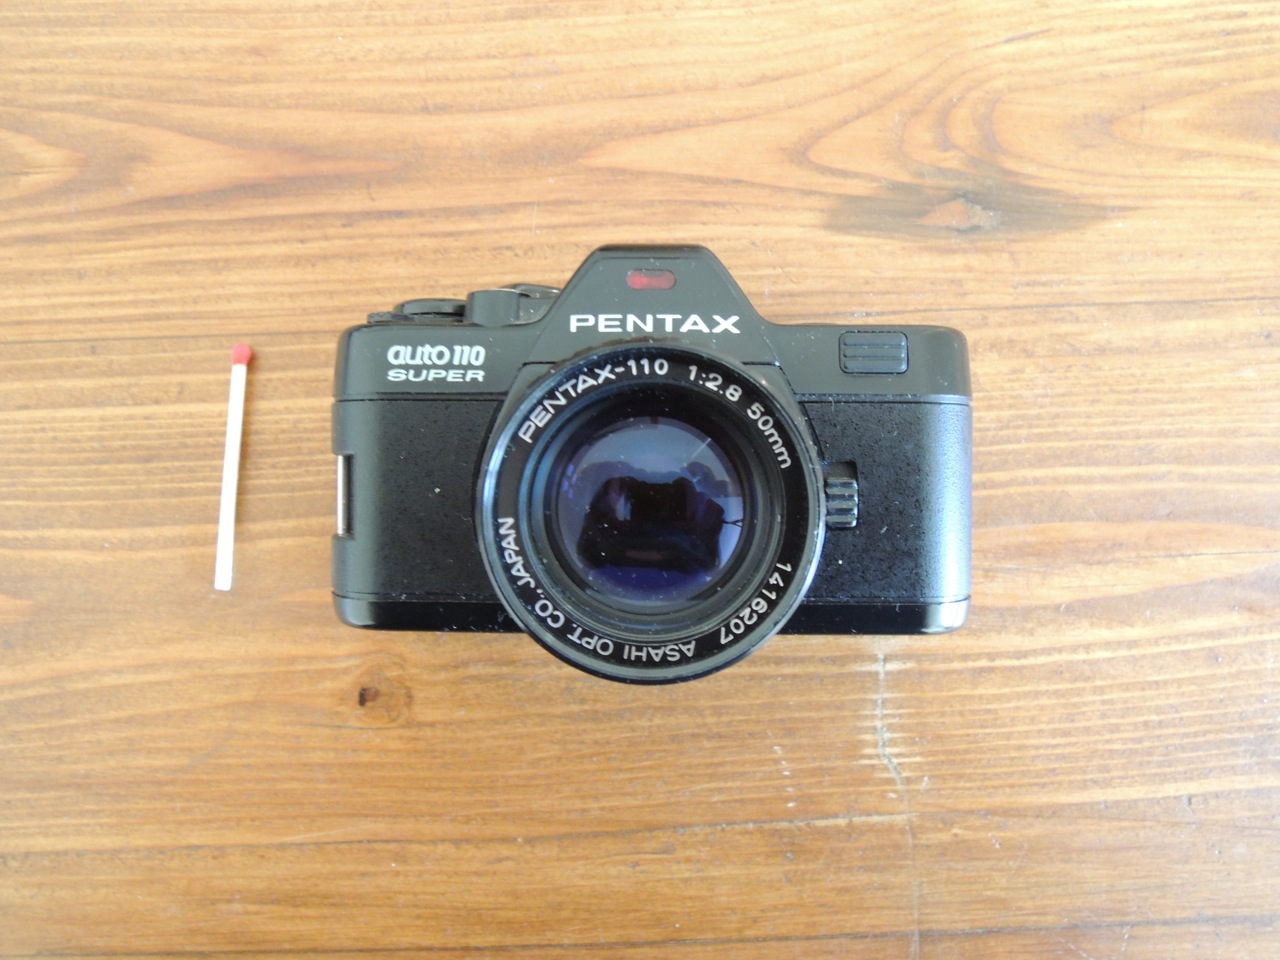 The Pentax auto 110 super – All my cameras